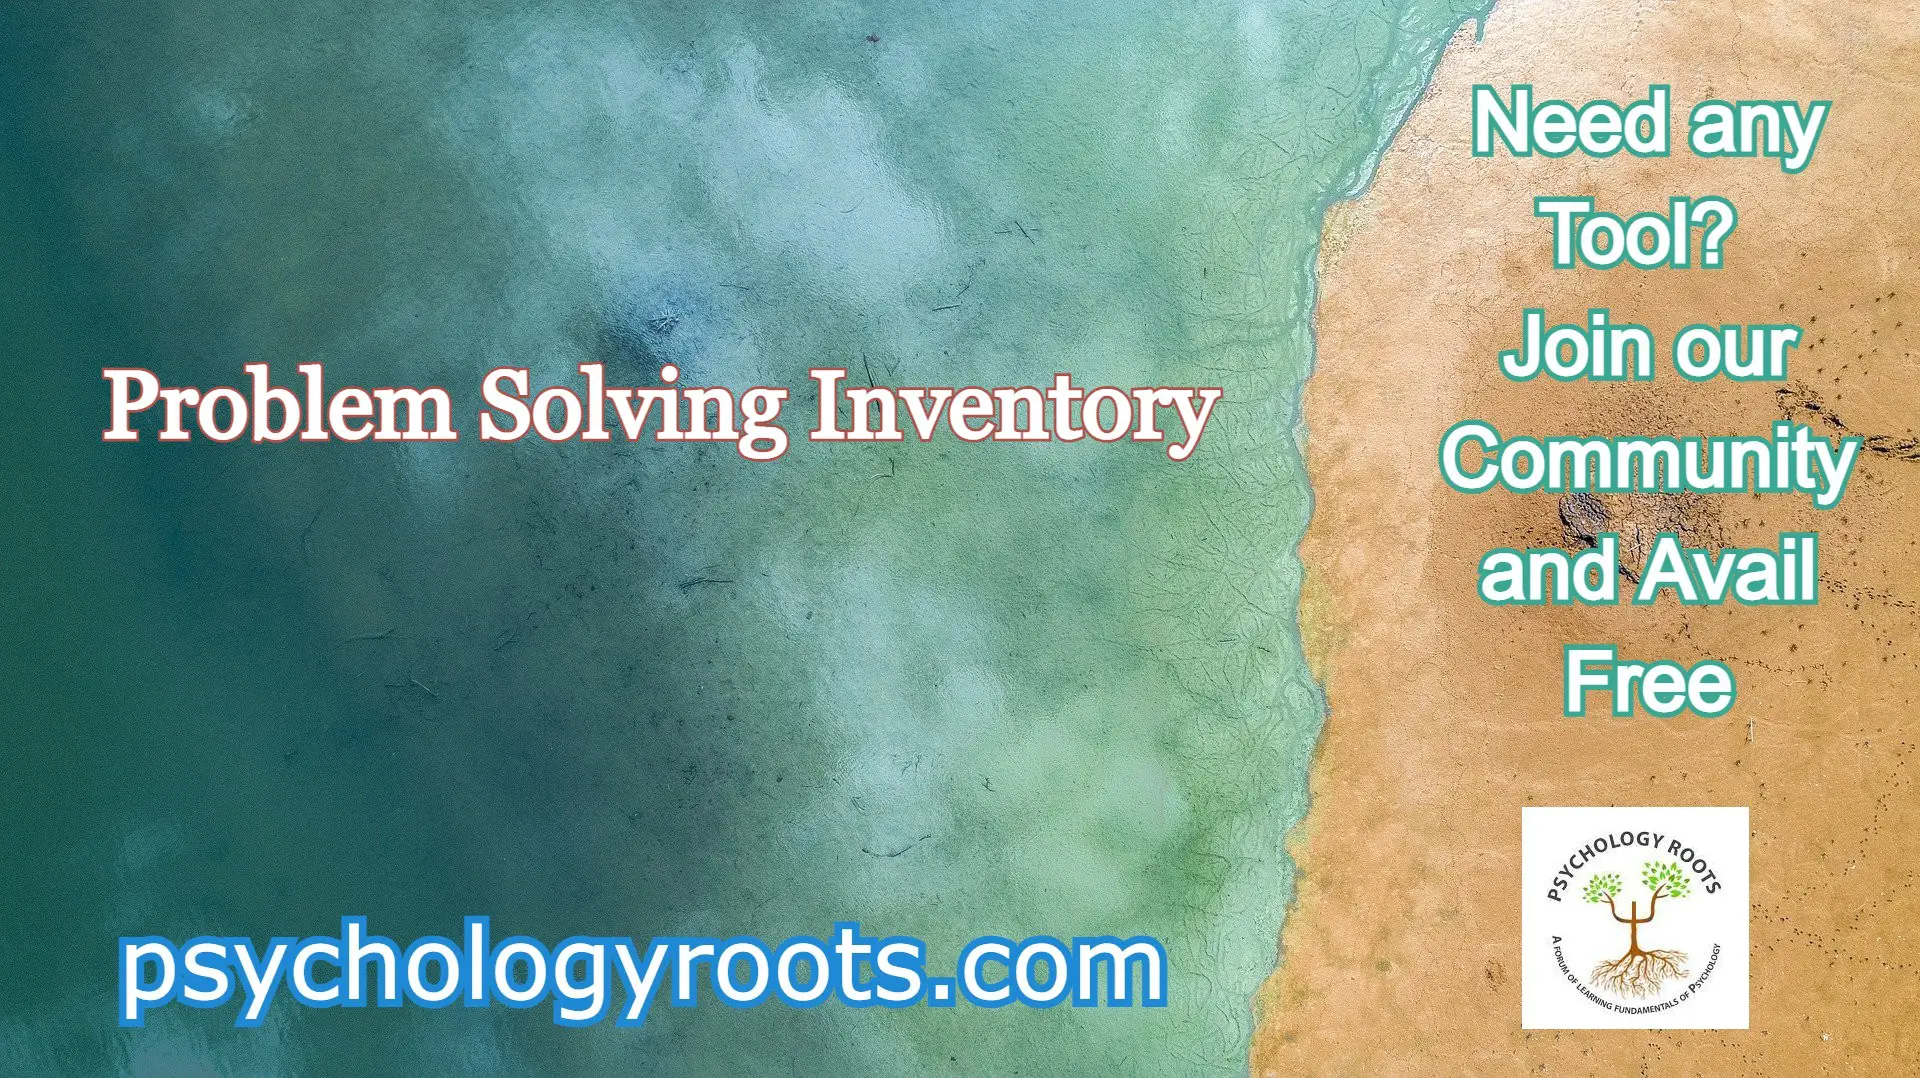 problem solving inventory (psi)